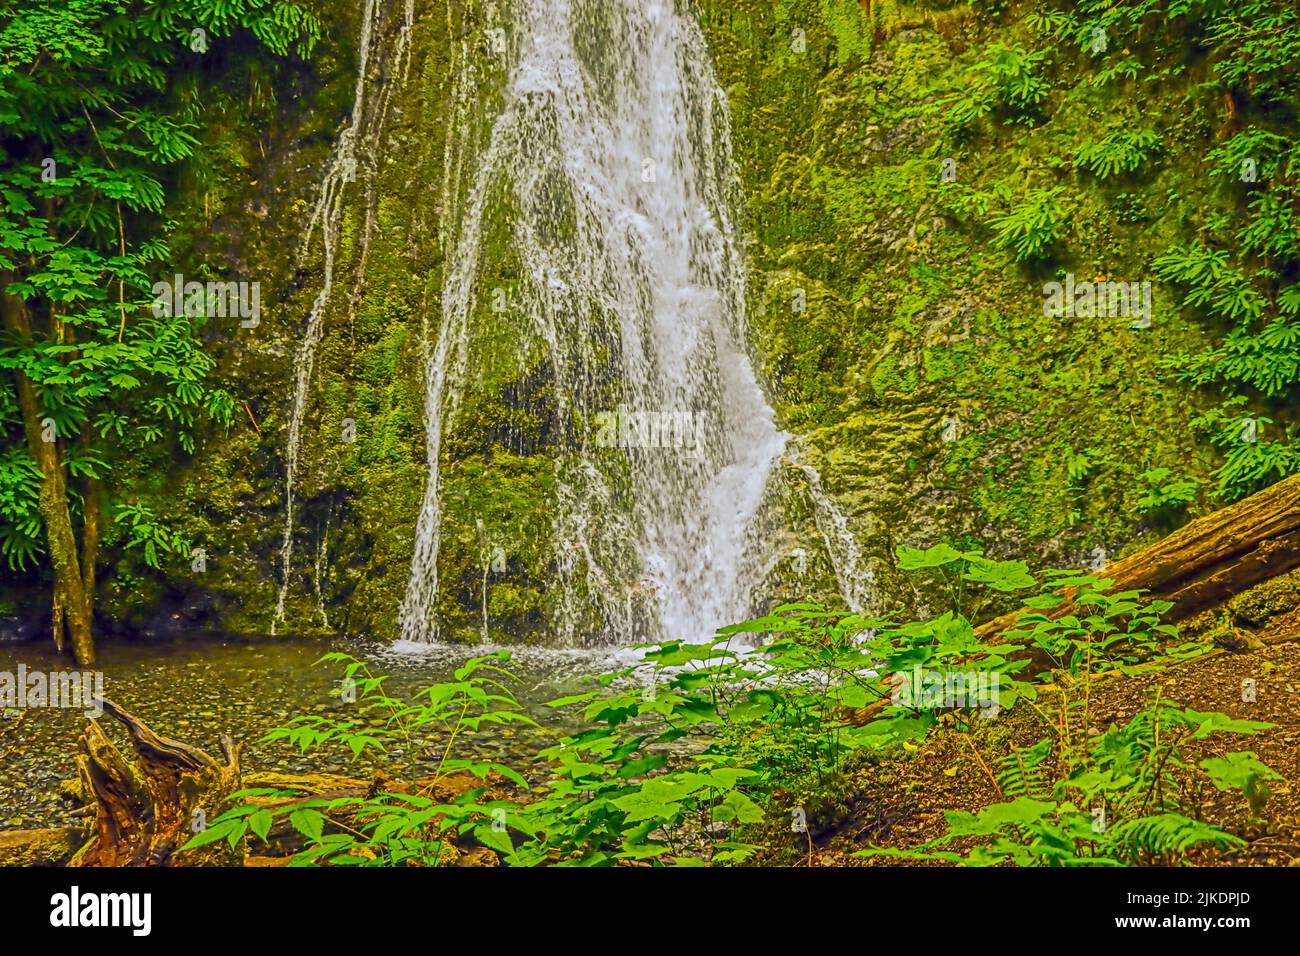 Madison Creek Falls in the Olympic National Park near Port Angeles, Washington. Stock Photo